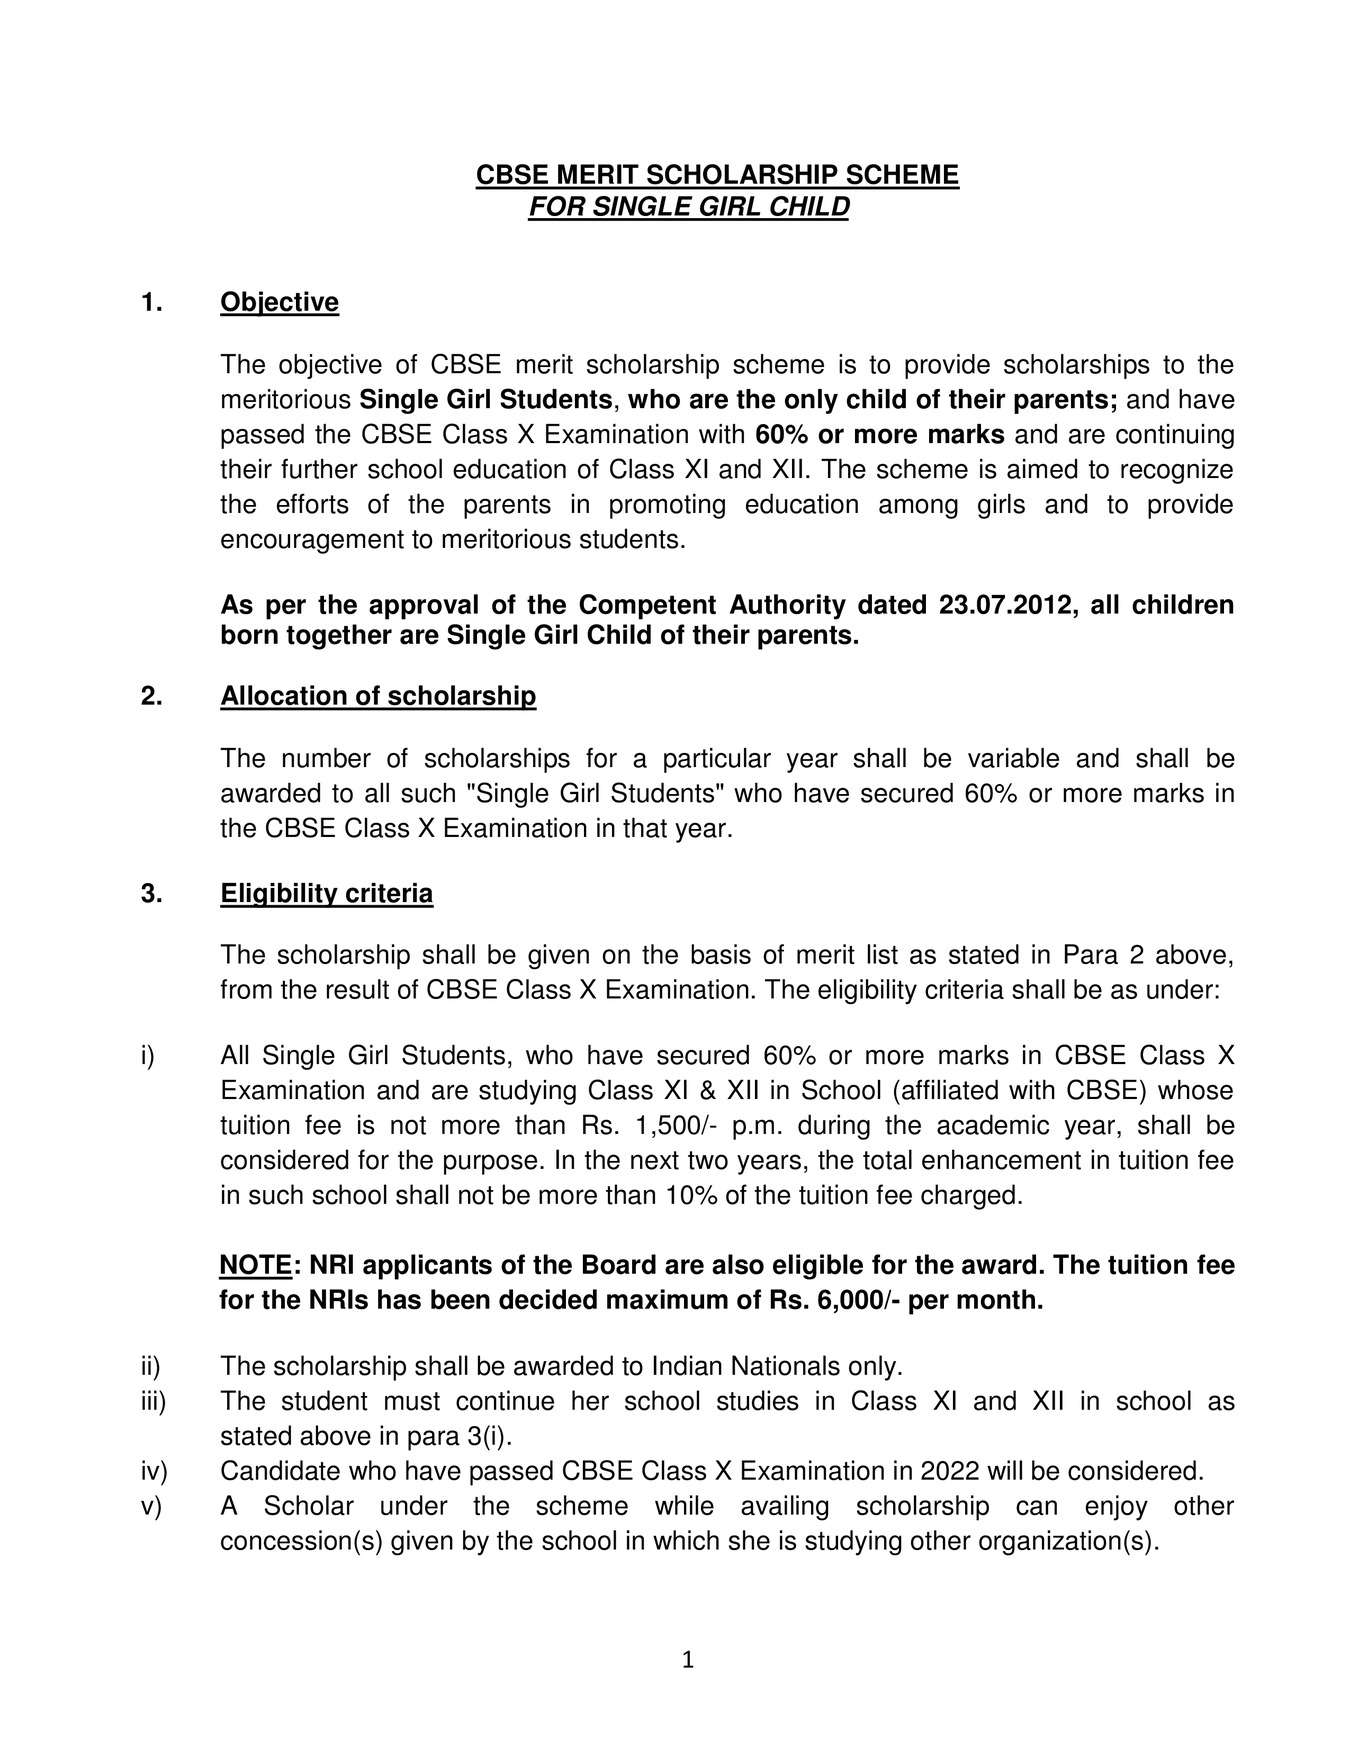 CBSE Single Girl Child Scholarship Scheme 2022 Guidelines PDF